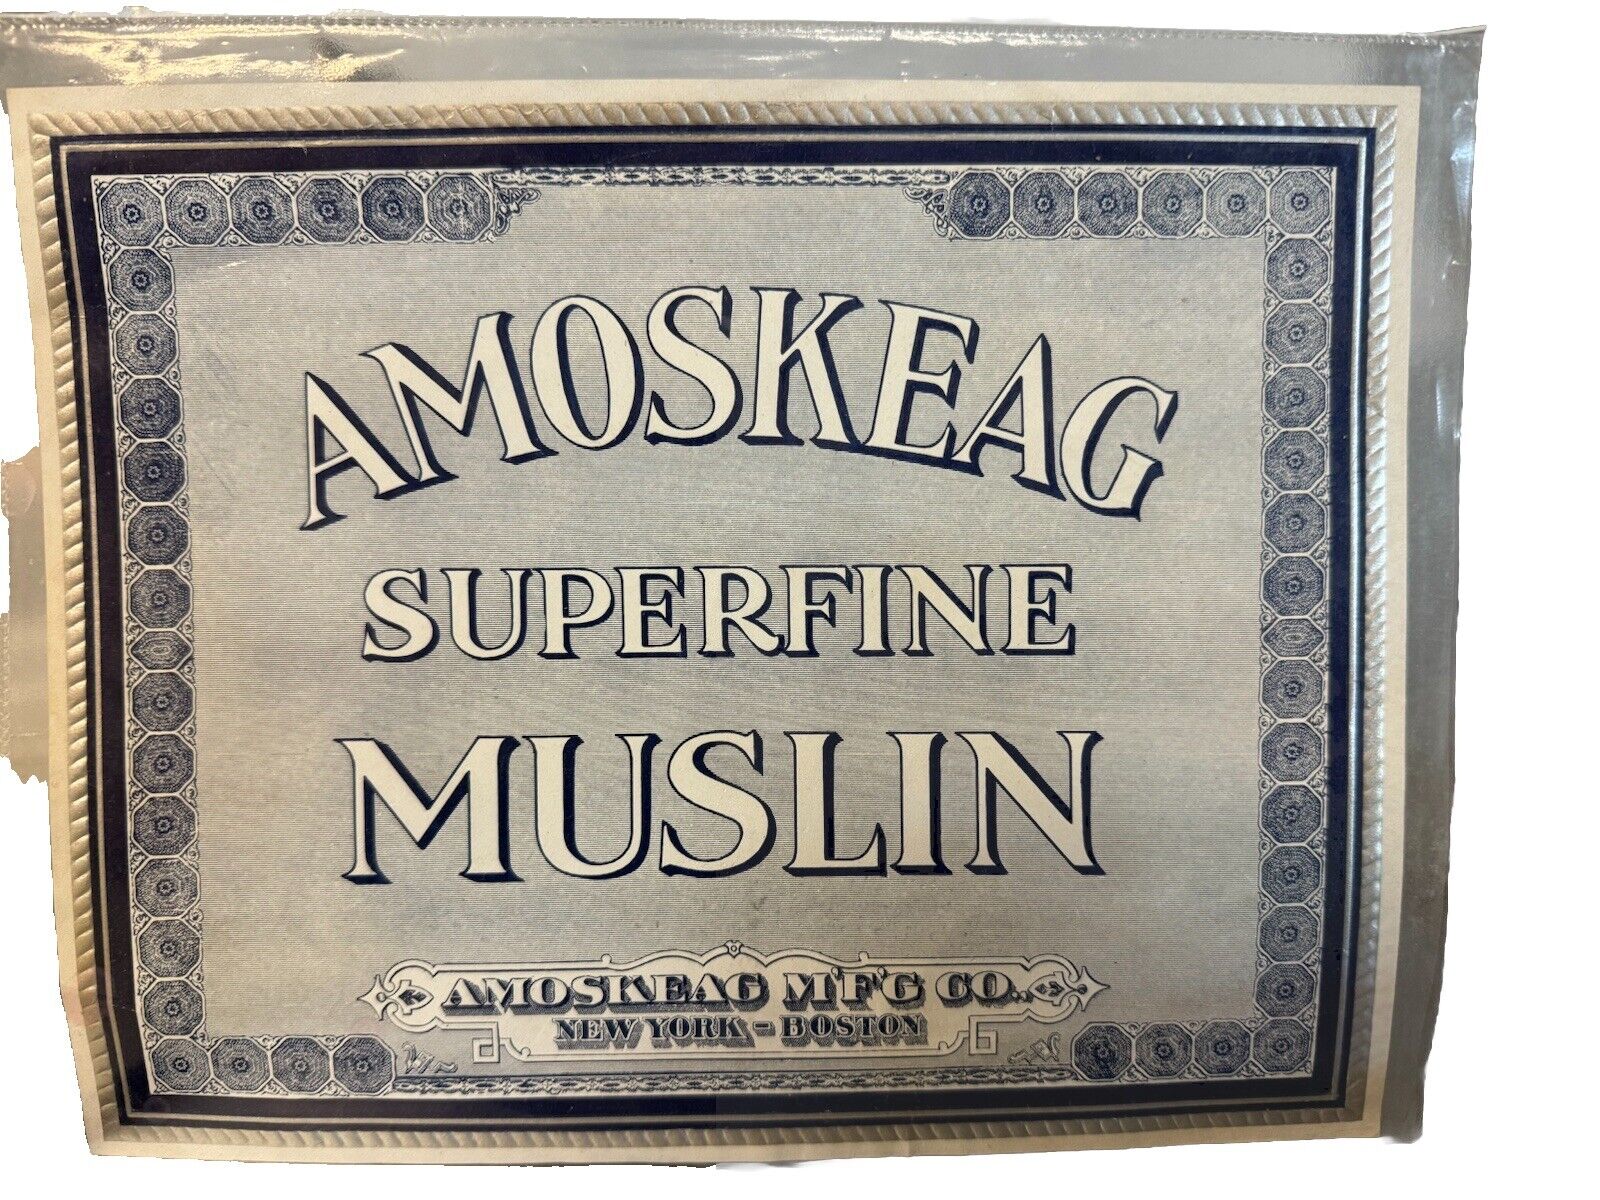 Vintage Amoskeag Superfine Muslin Label Tag Amoskeag Manufacturing Co.